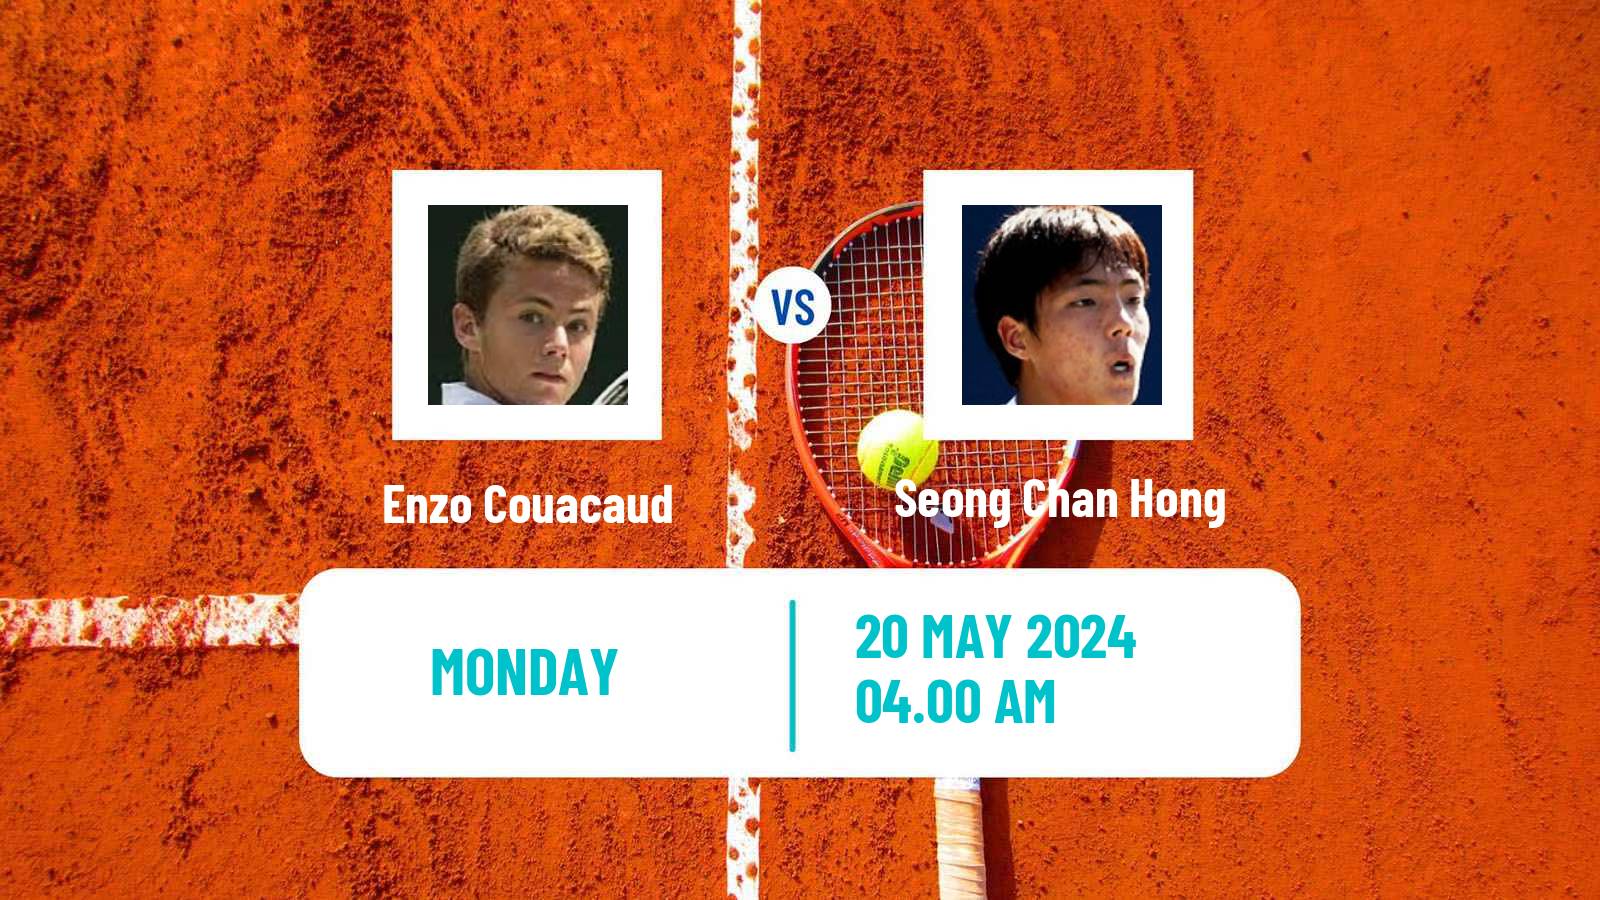 Tennis ATP Roland Garros Enzo Couacaud - Seong Chan Hong